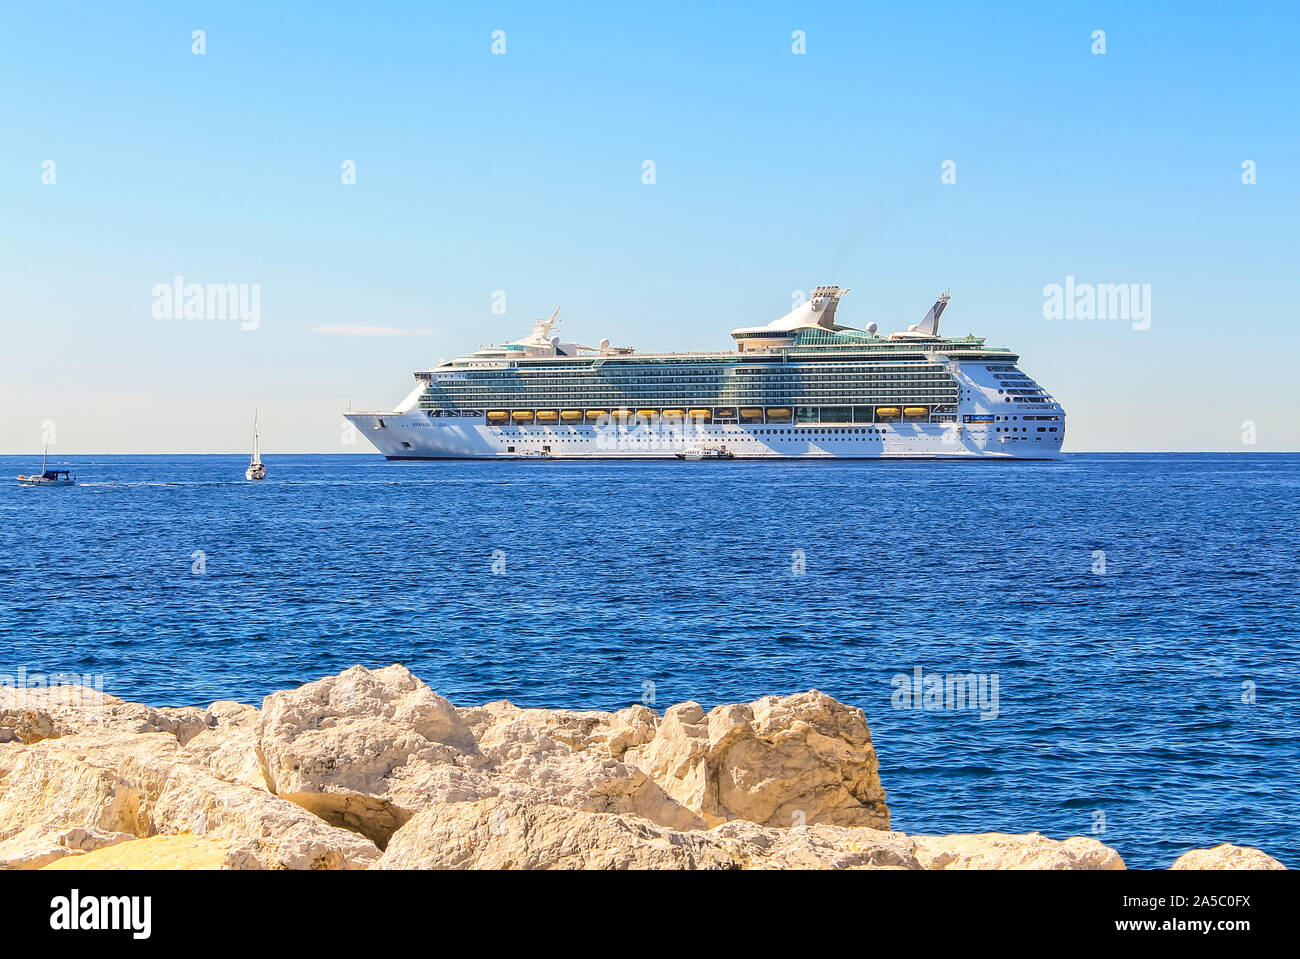 Royal Caribbean Cruise Lines ship Mariner of the Seas anchored outside Cannes, France shoreline Stock Photo